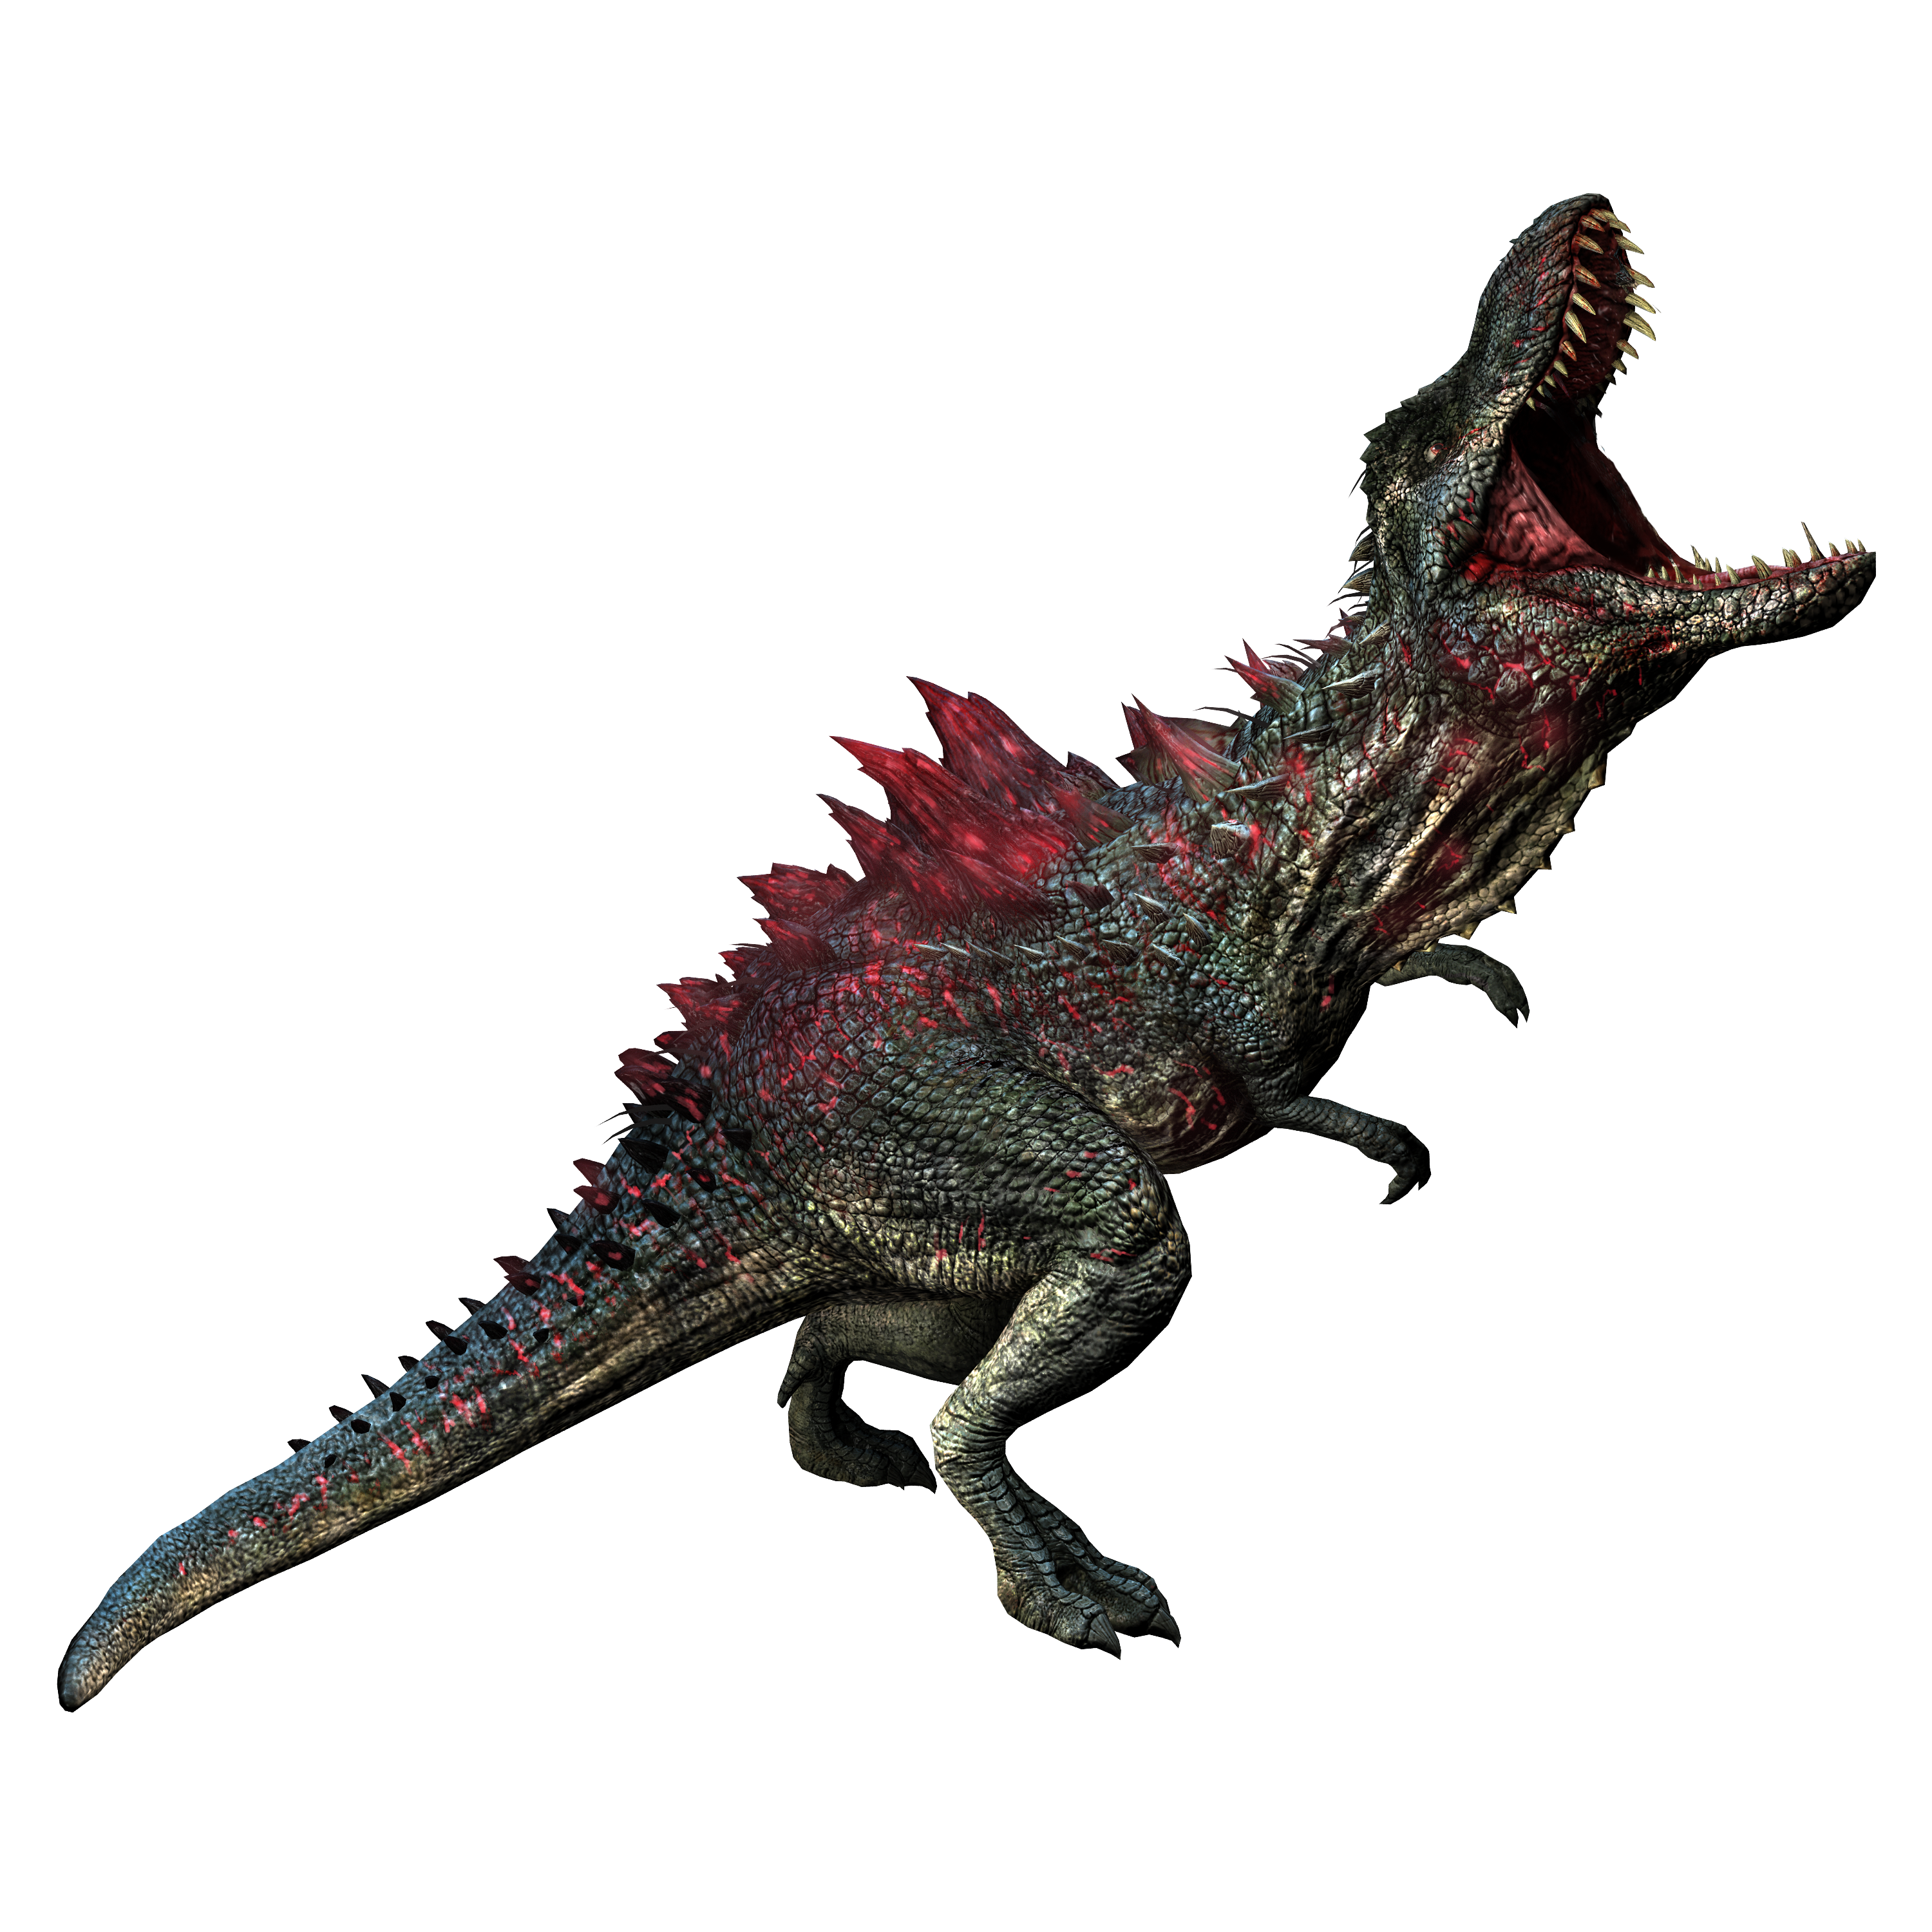 Mortem rex, Jurassic Park Wiki